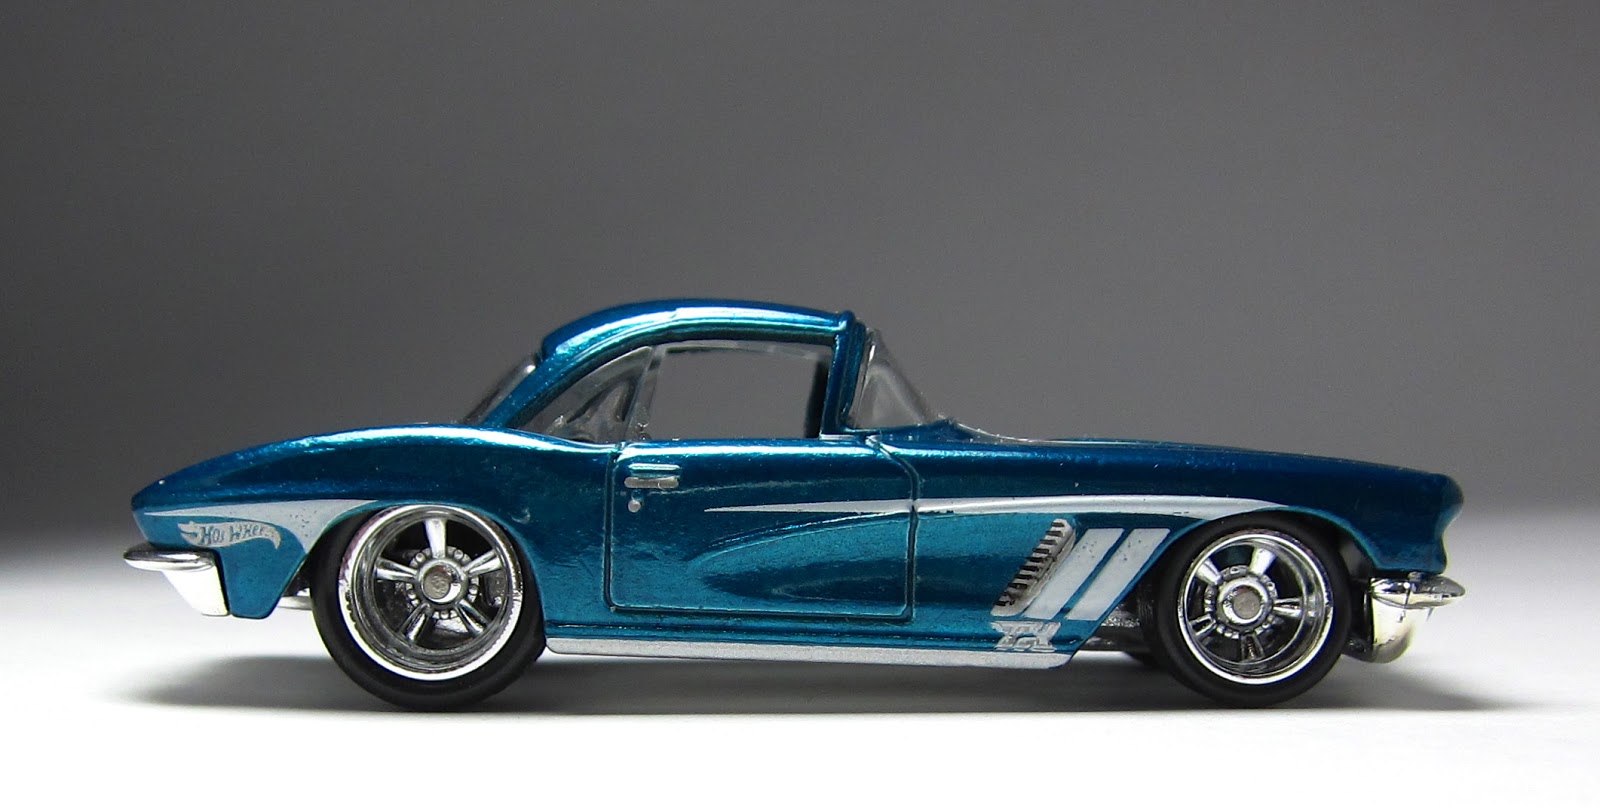 Iphone Blue Stingray Corvette Wallpaper.